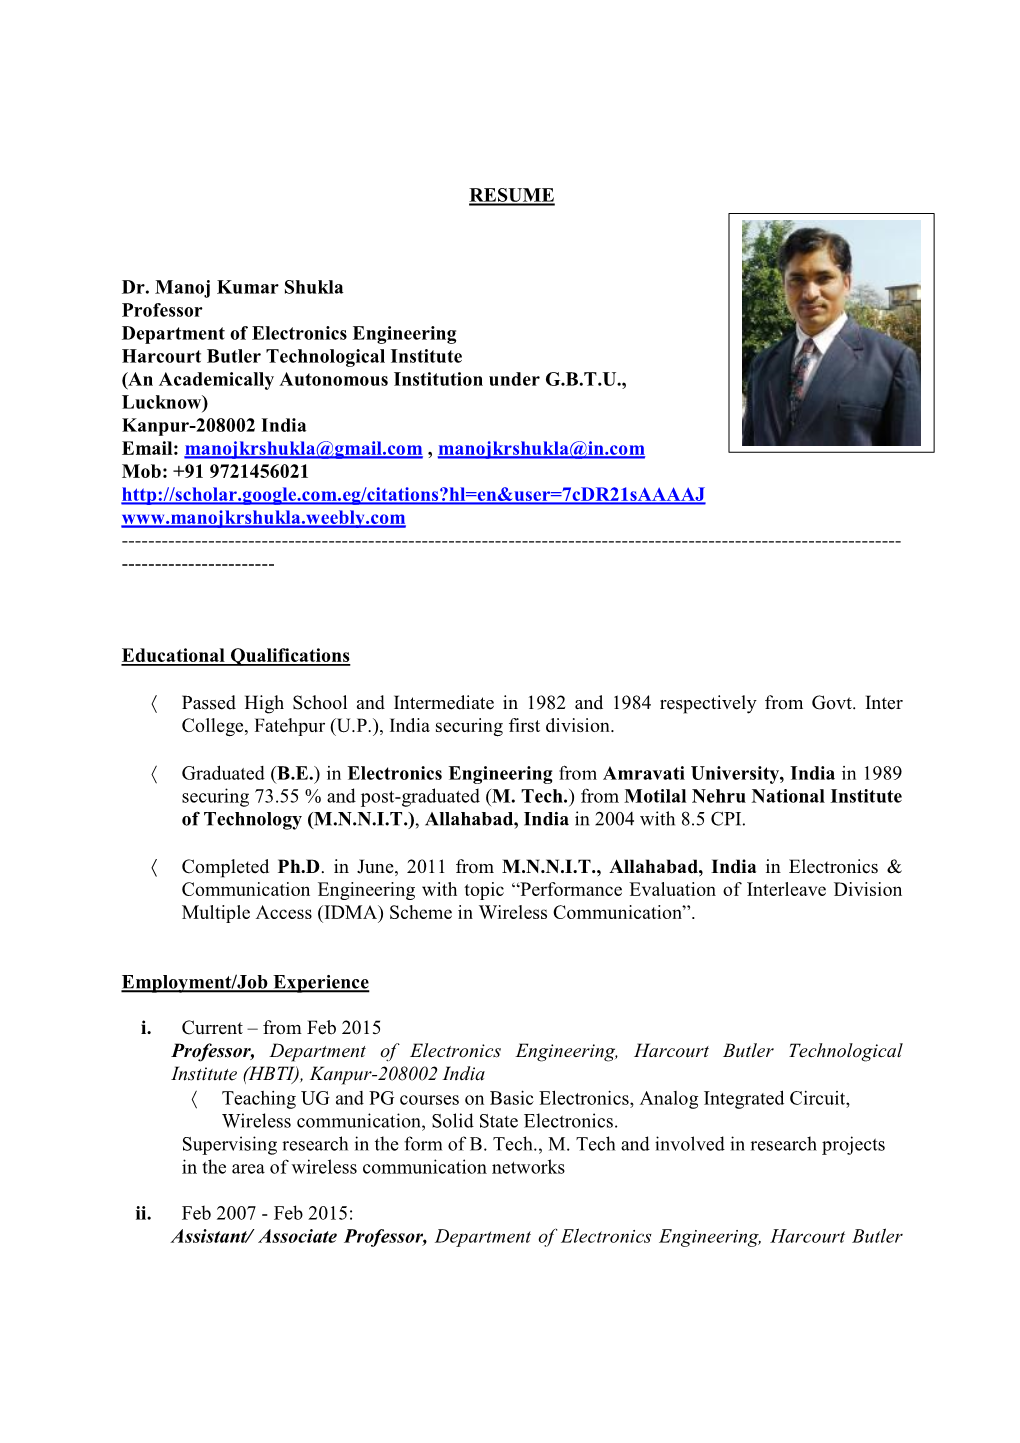 RESUME Dr. Manoj Kumar Shukla Professor Department of Electronics